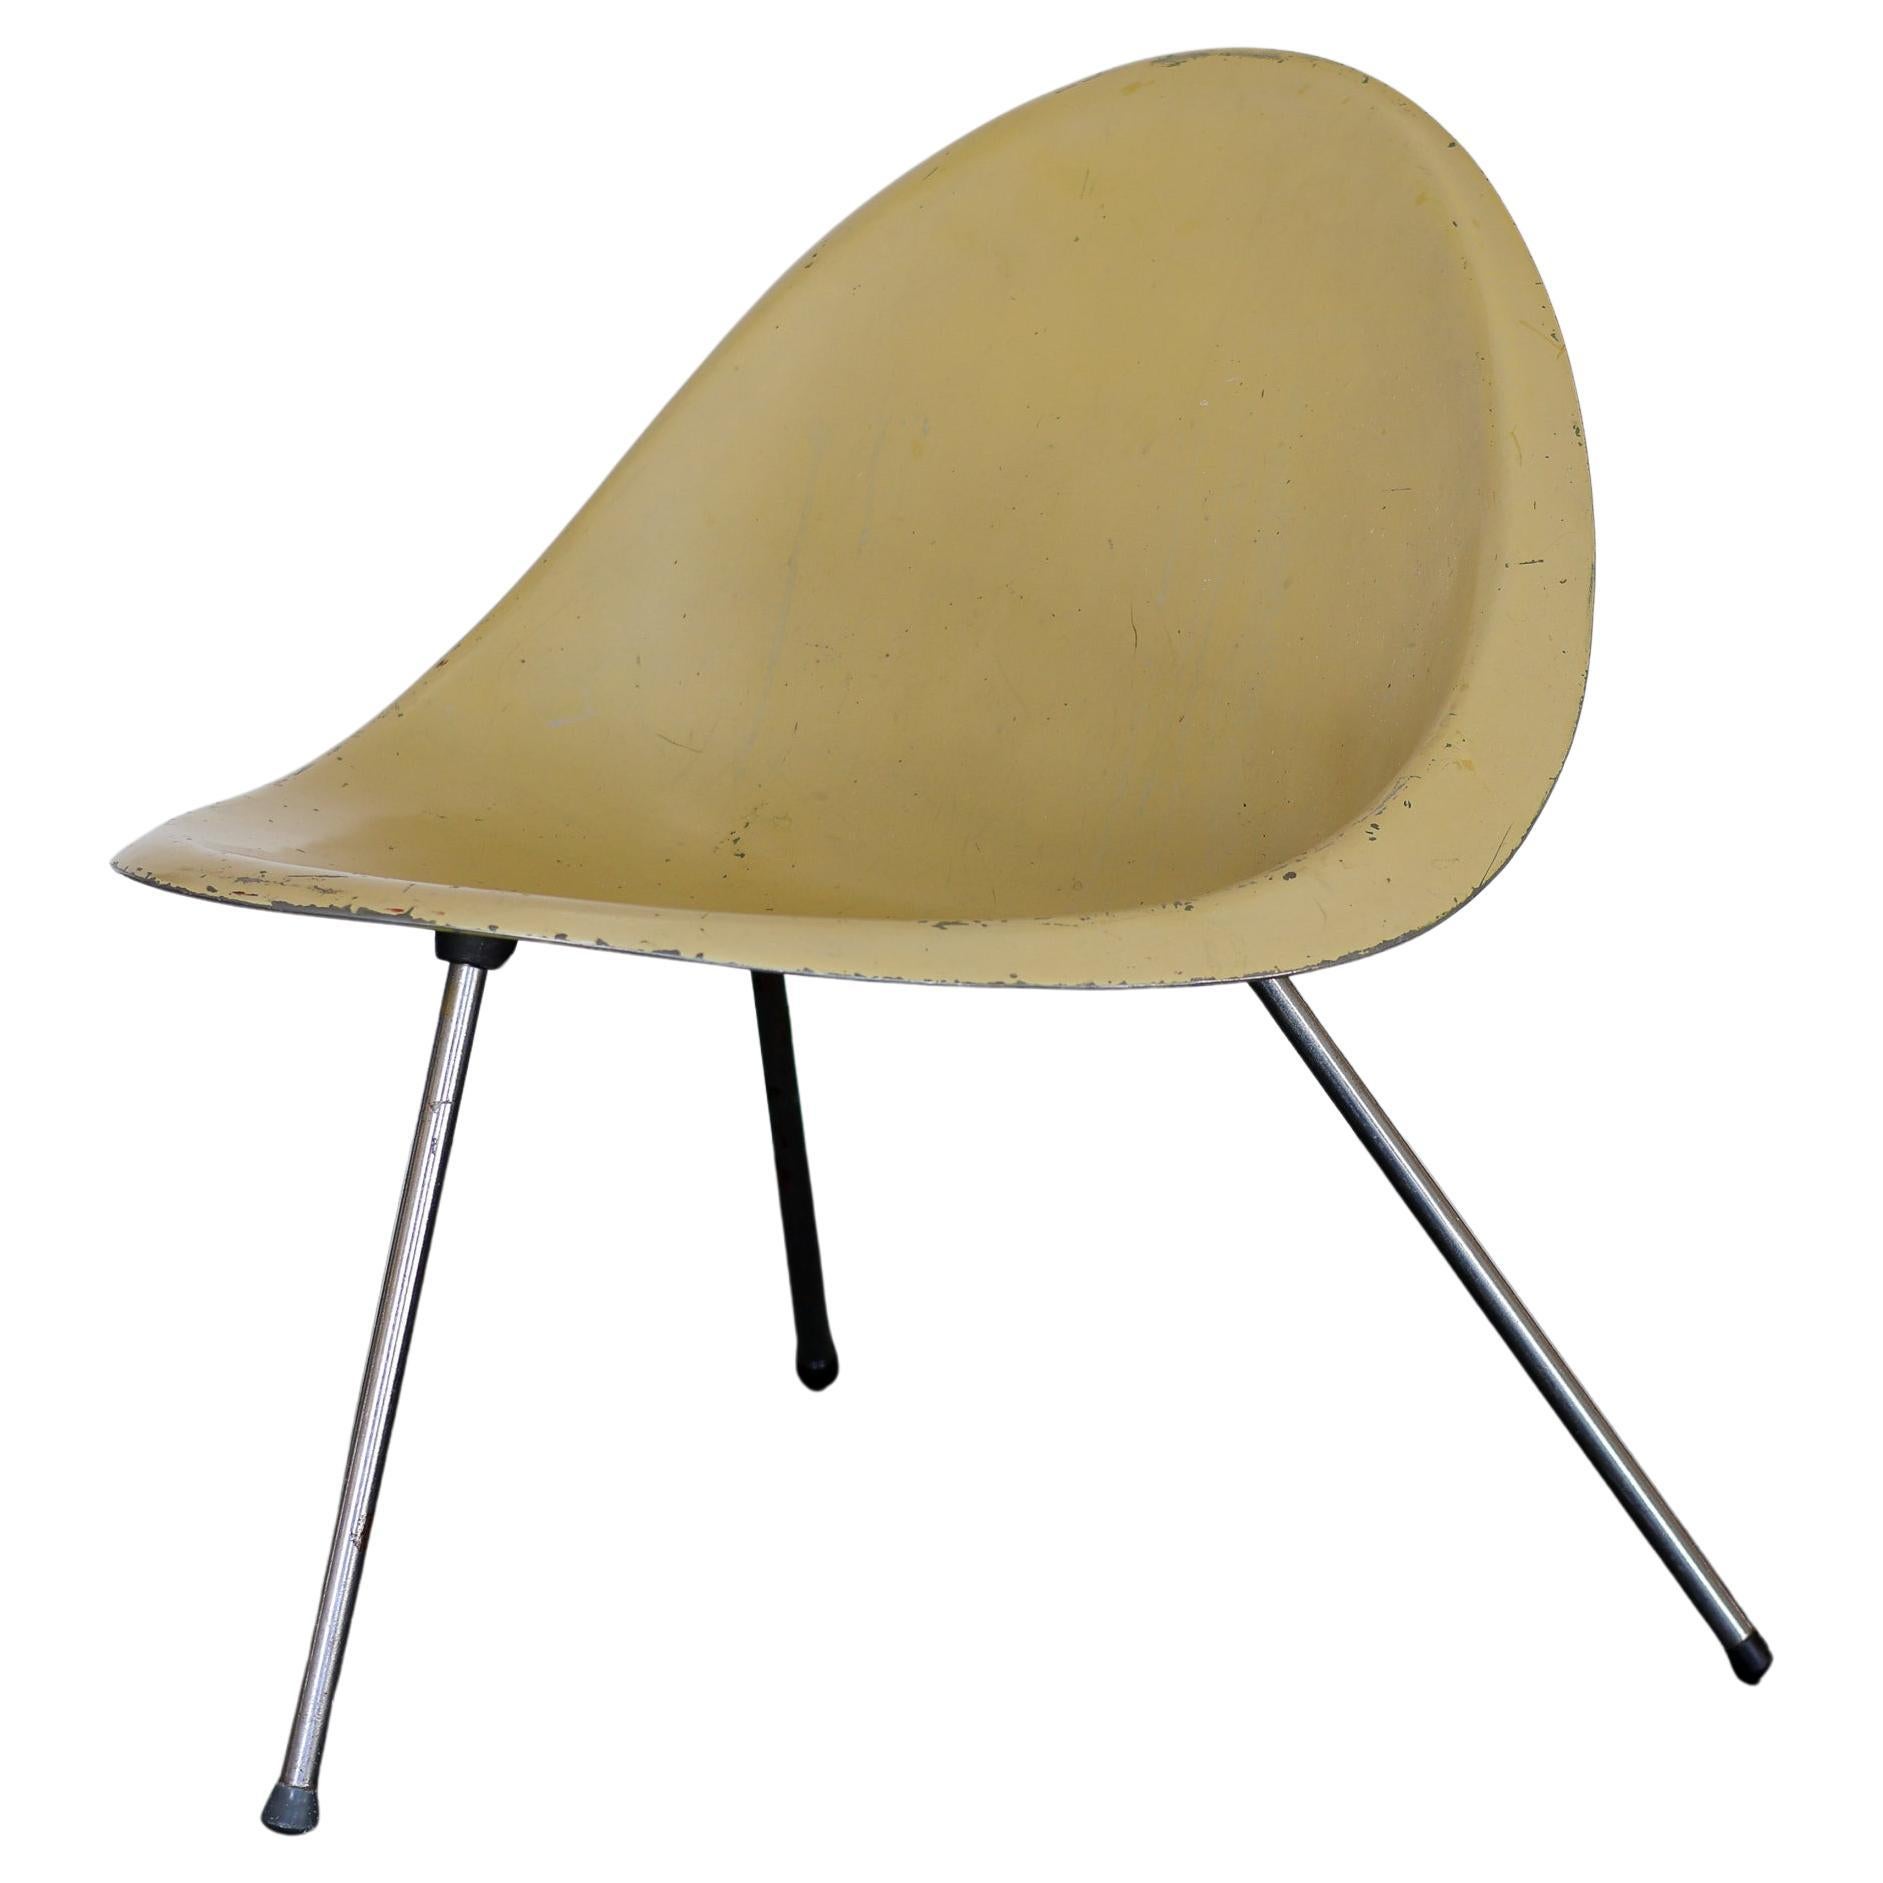 Poul Kjaerholm 1953 Molded Aluminum Chair For Sale